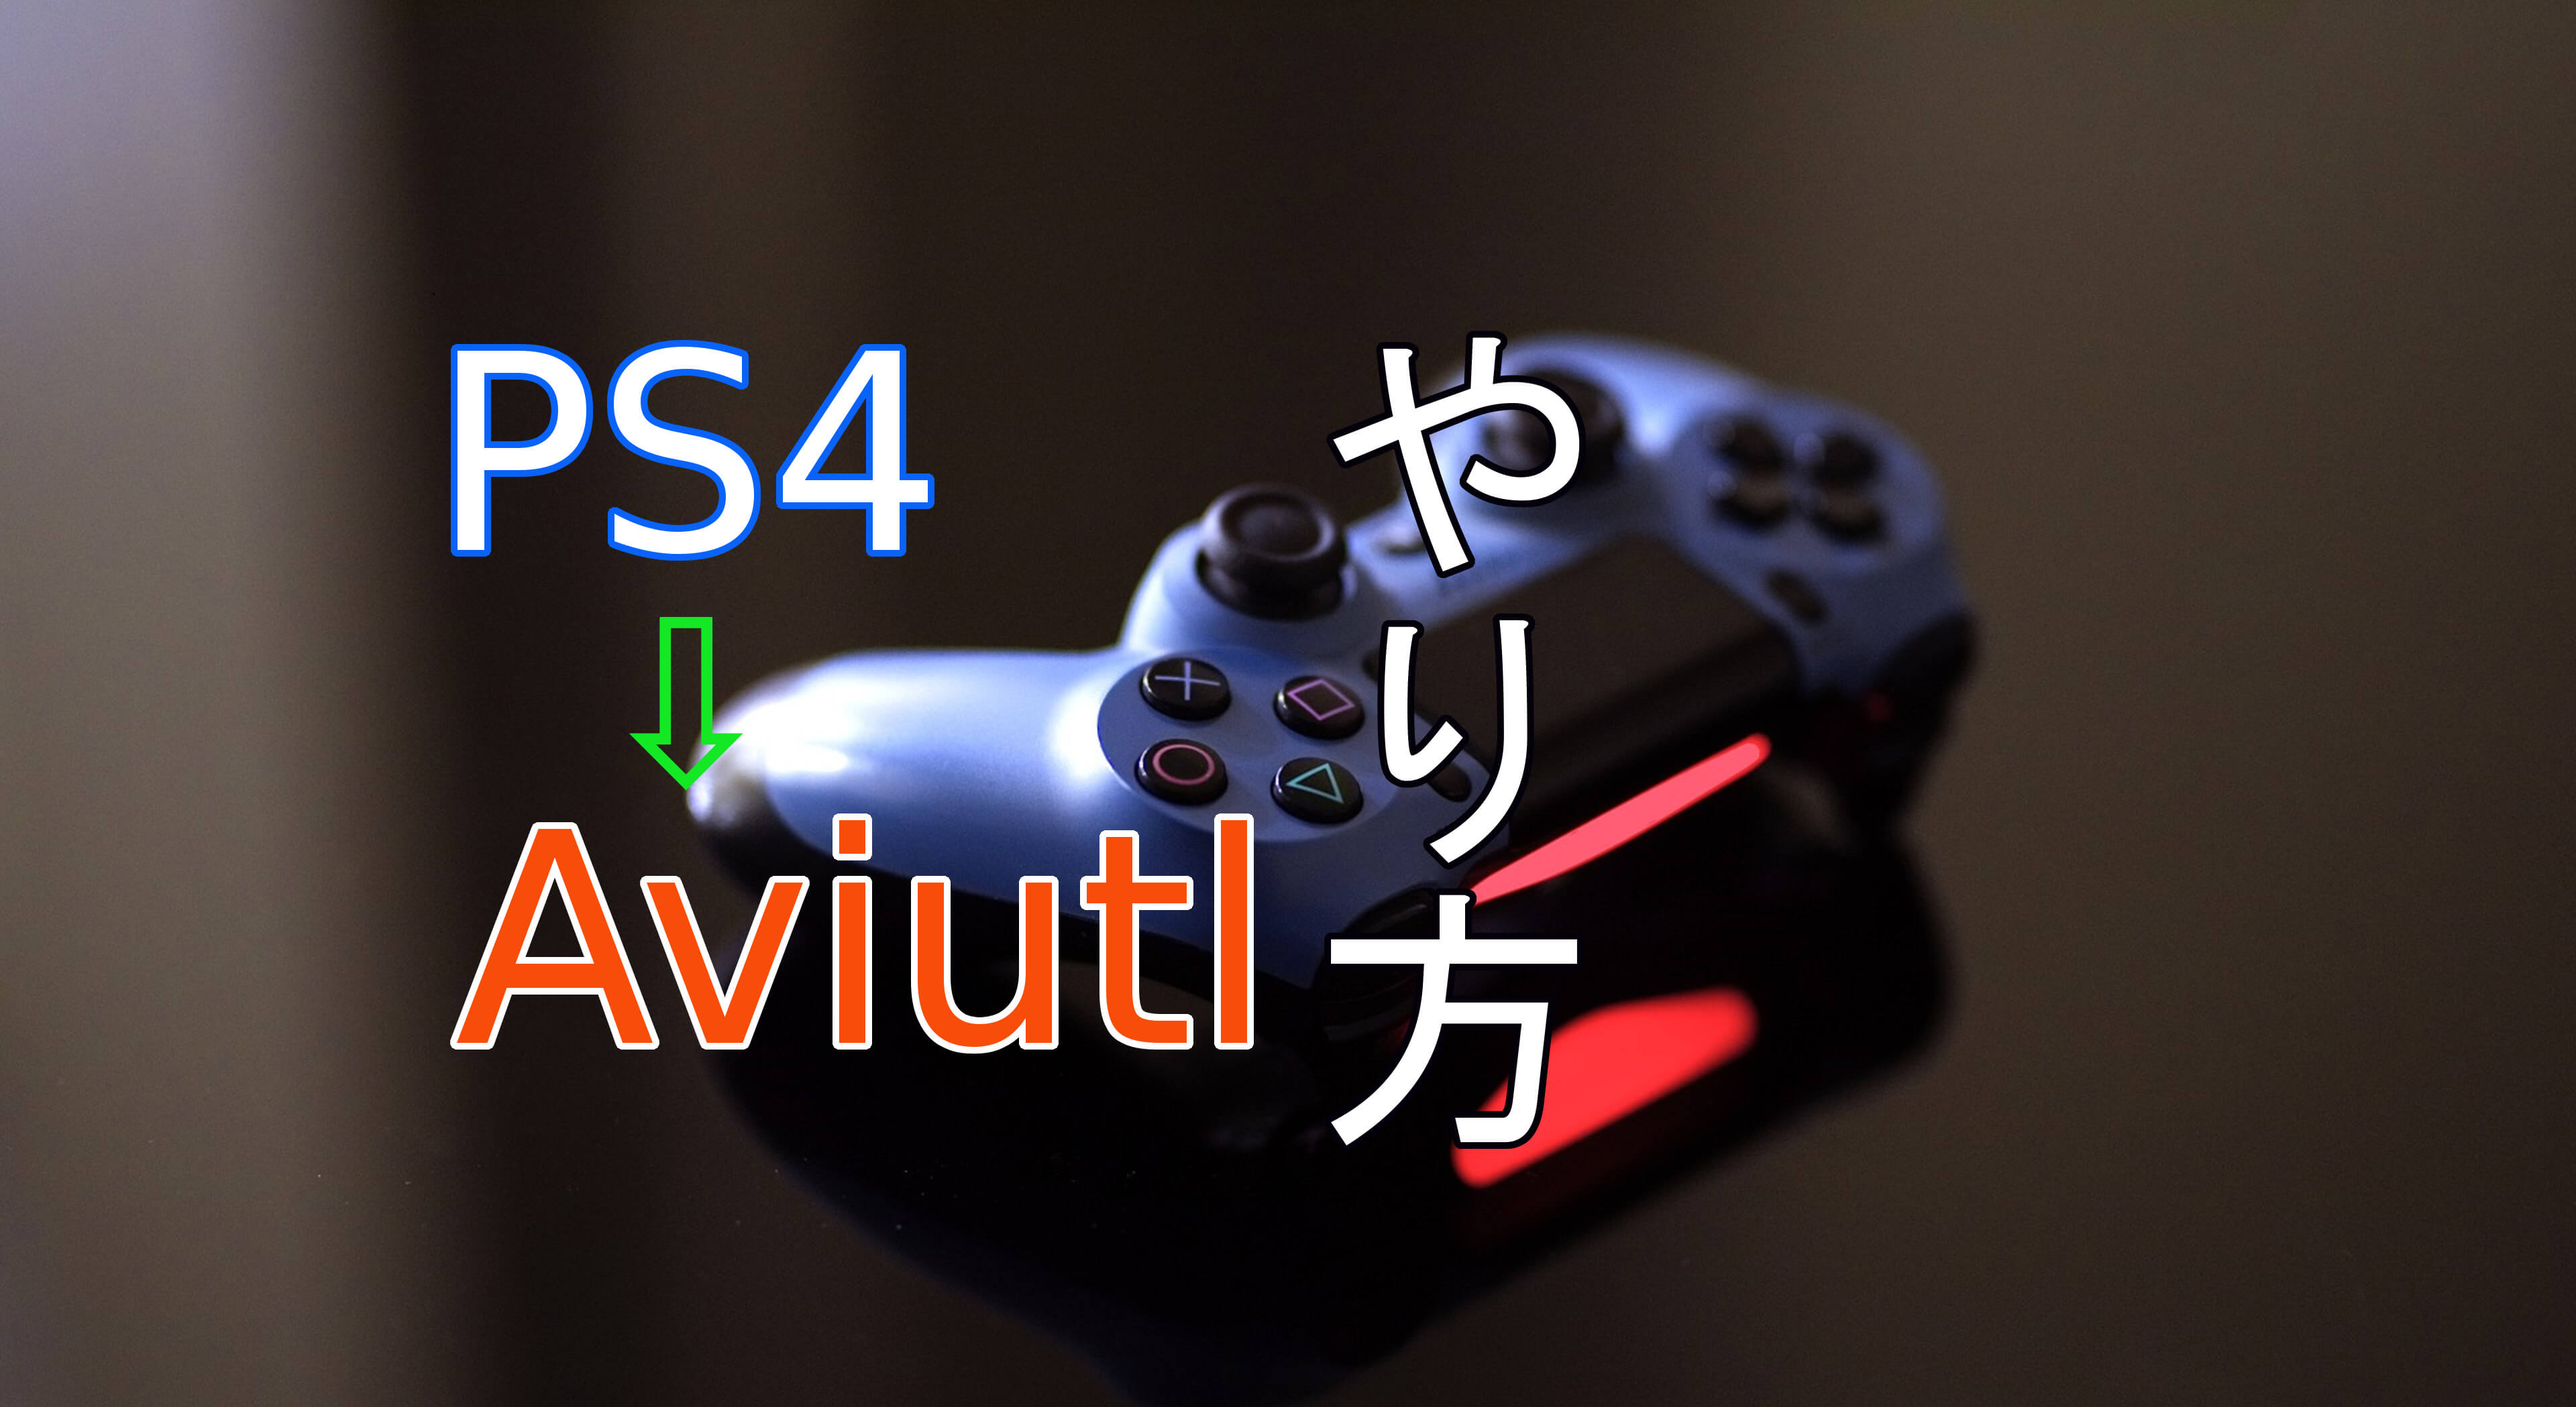 Aviutl Ps4で録画した動画をaviutlで編集してyoutubeに投稿する方法 めらにっく